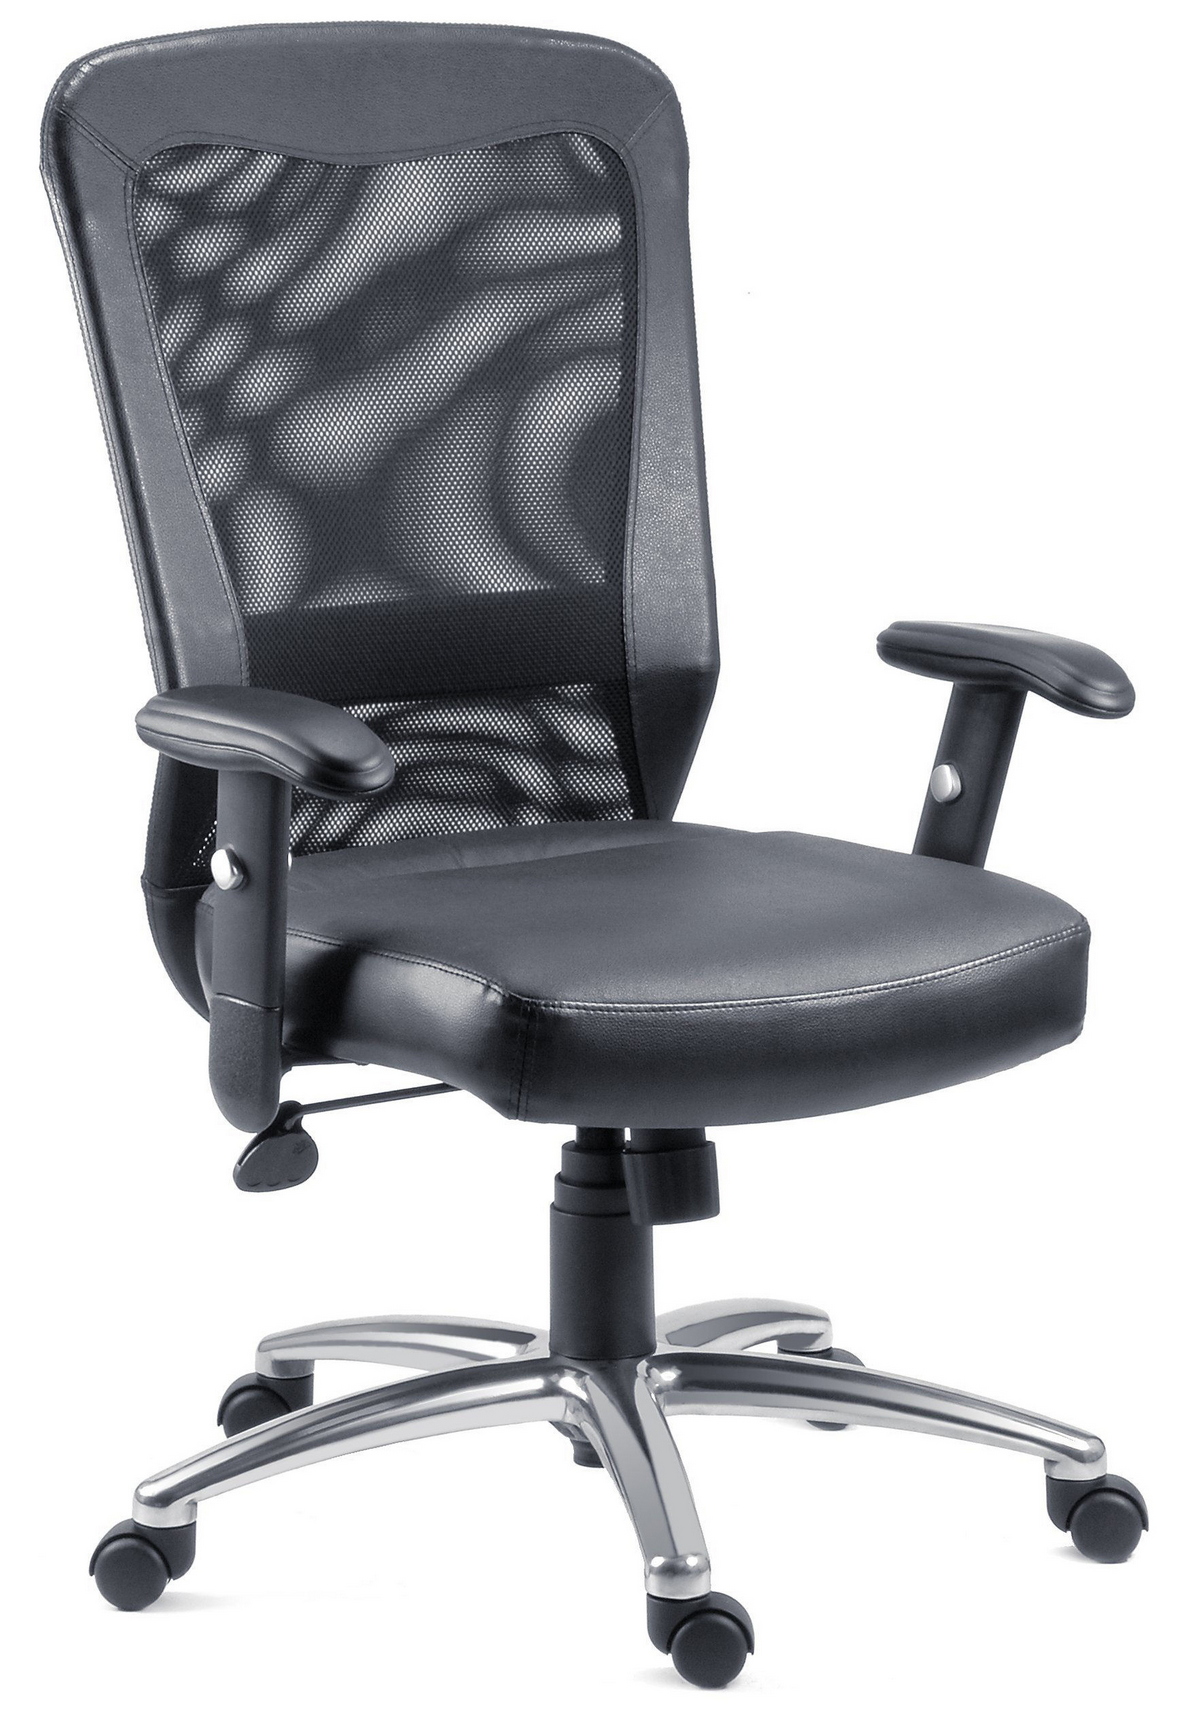 Squear Office Chair Executive Mesh Chair Leather